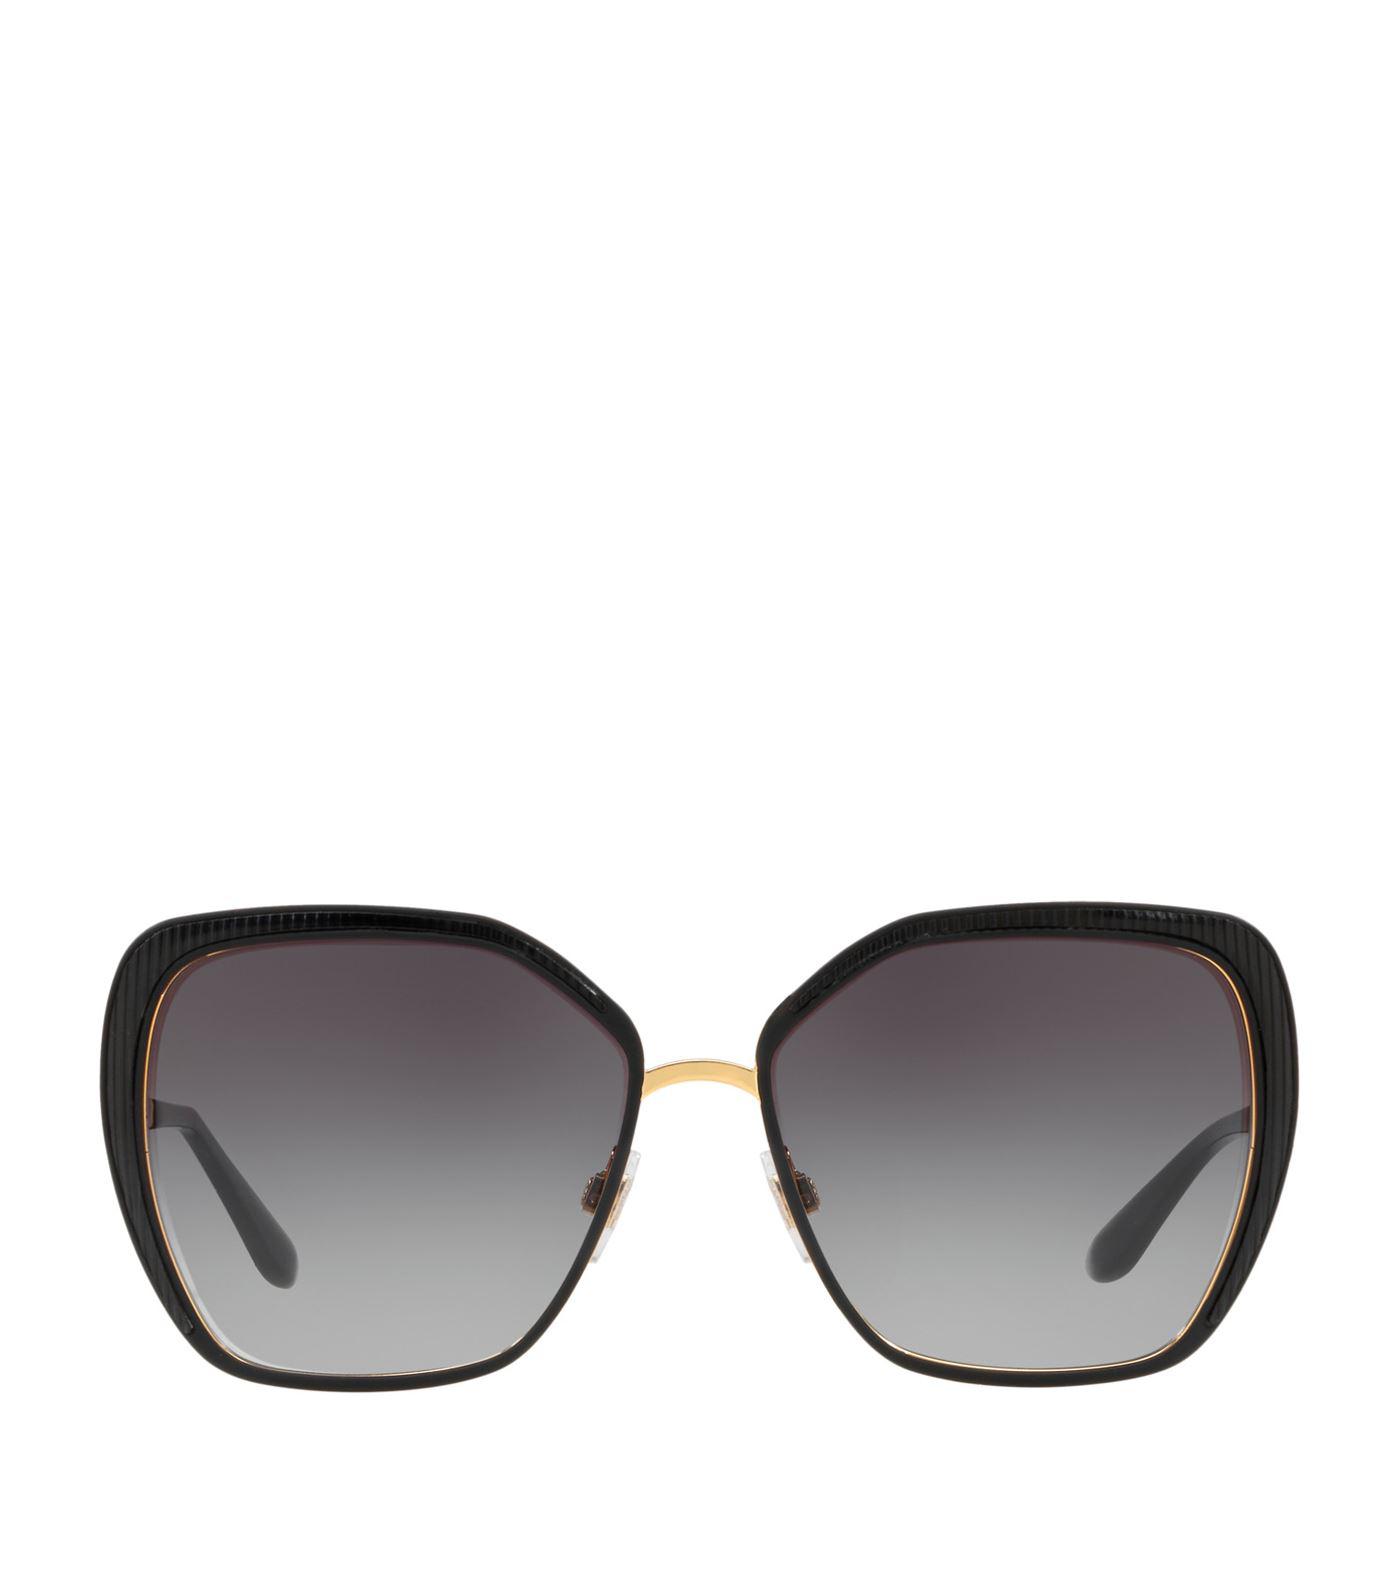 Dolce & Gabbana Oversized Square Sunglasses in Black - Lyst